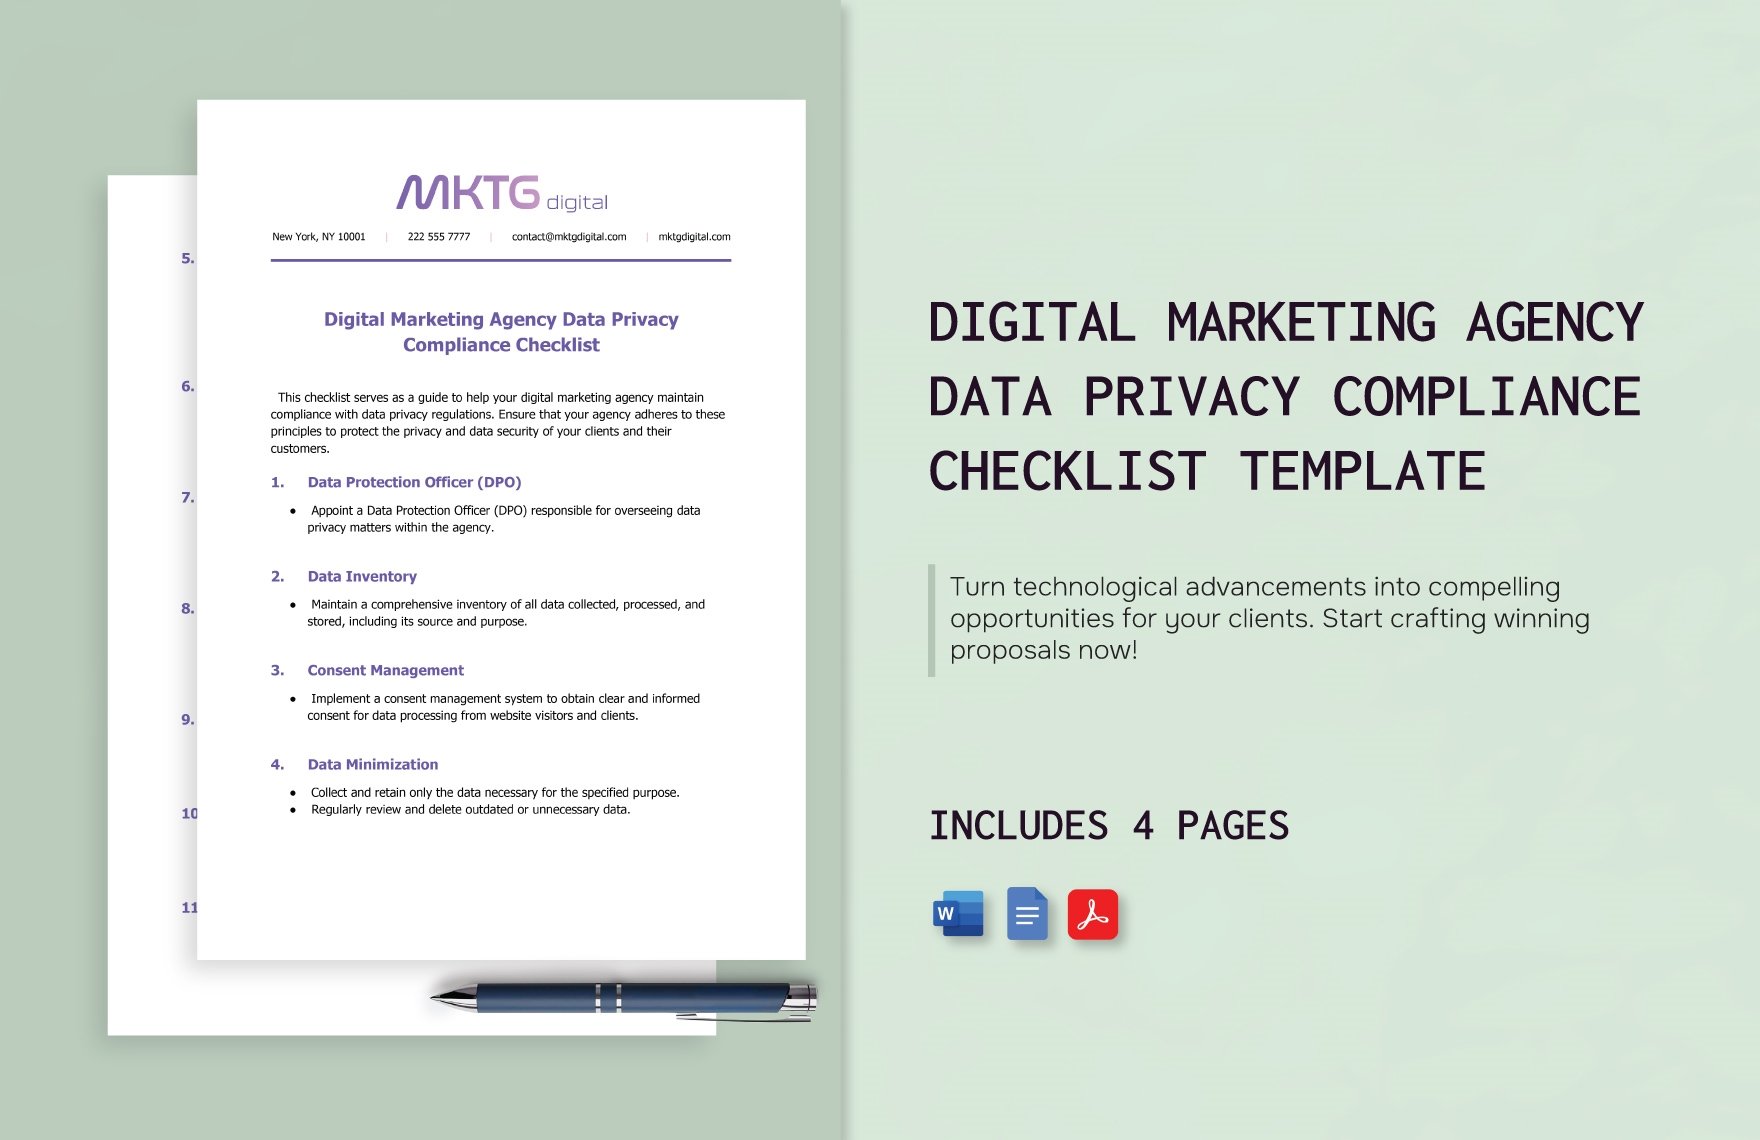 Digital Marketing Agency Data Privacy Compliance Checklist Template